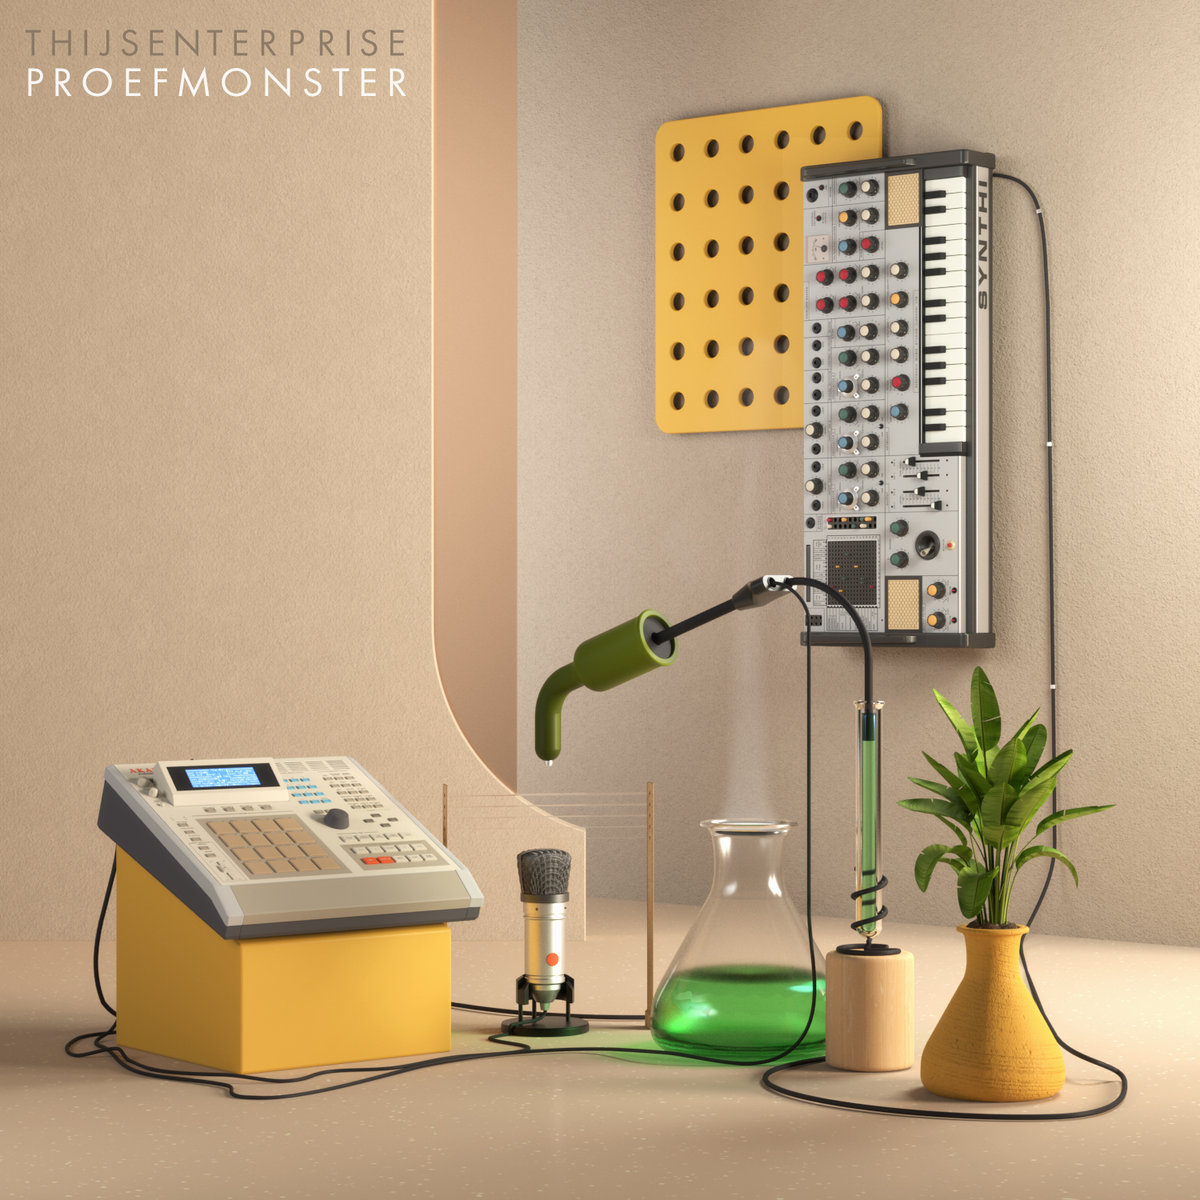 Free Download: Thijsenterprise – Proefmonster (Sample-based Remixes of Beastie Boys, MF DOOM, Mos Def, ATCQ & more)